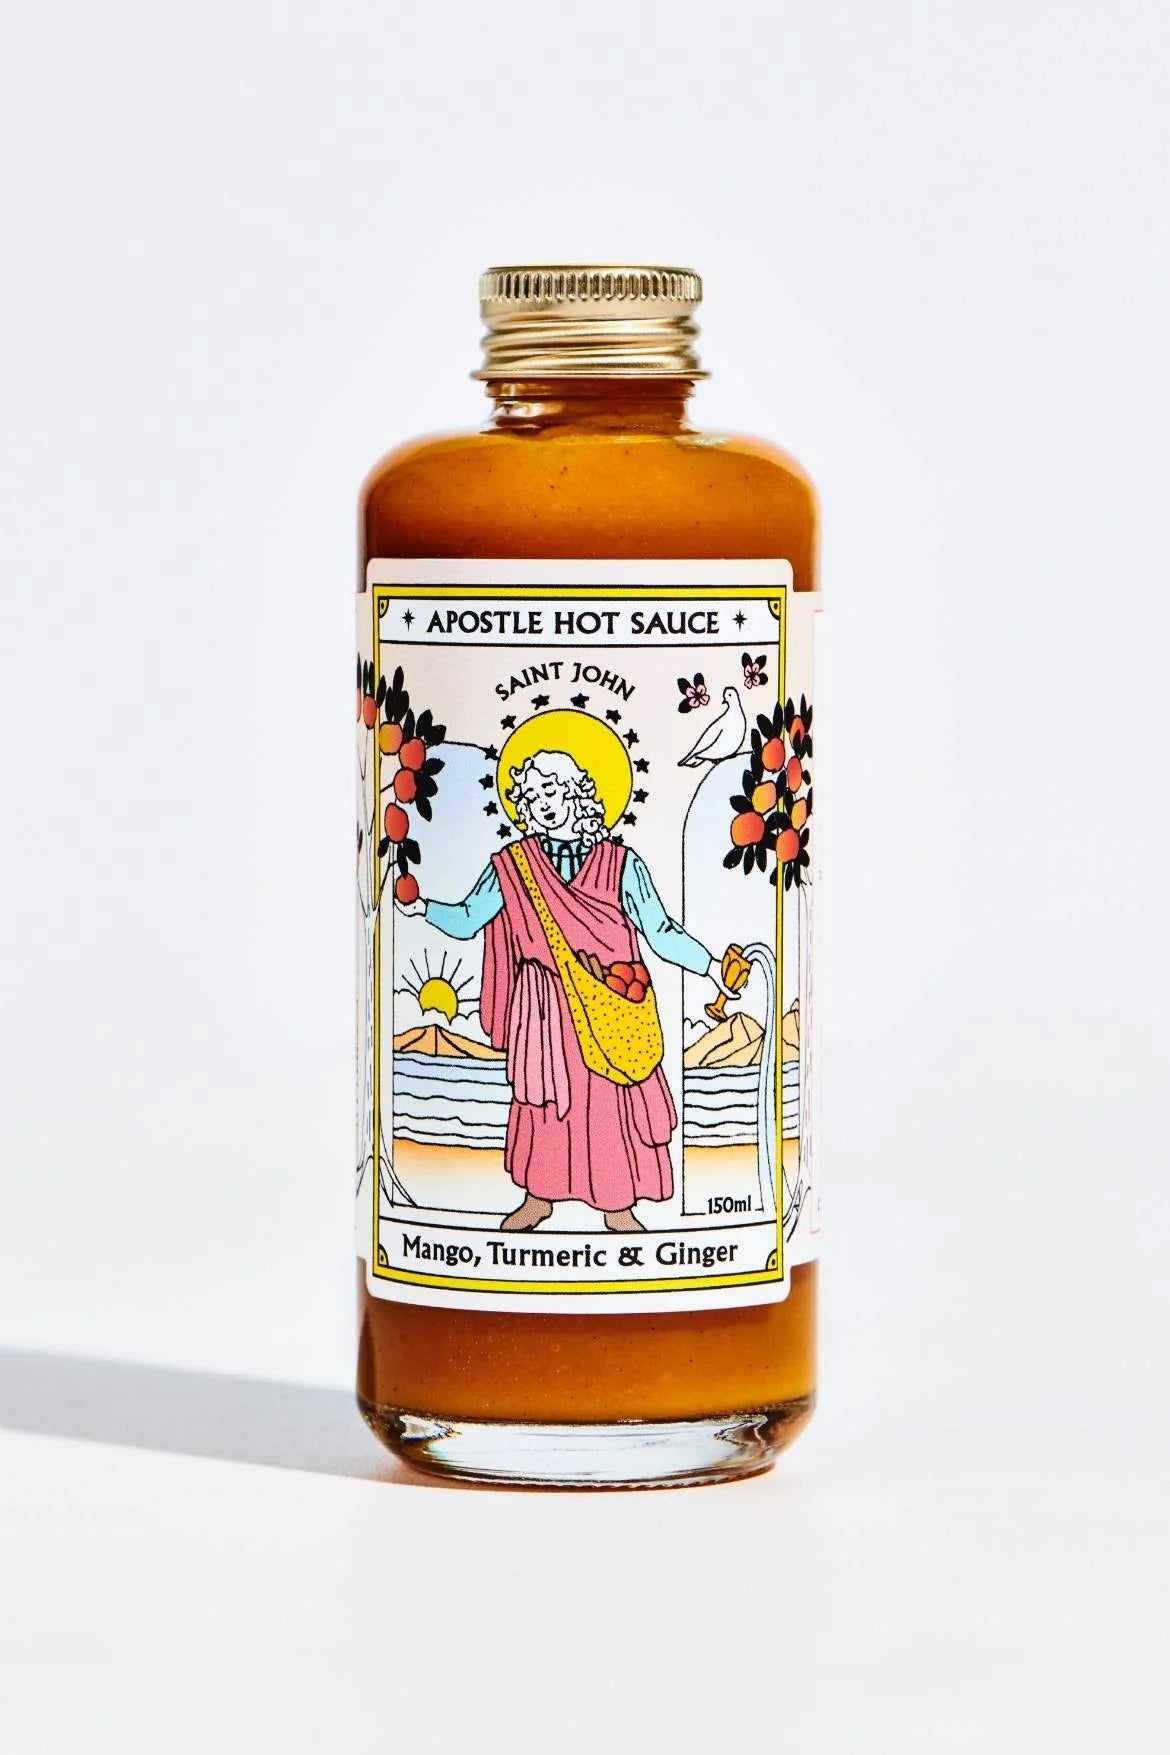 Apostle Hot Sauce - St. John Mango, Turmeric, Ginger